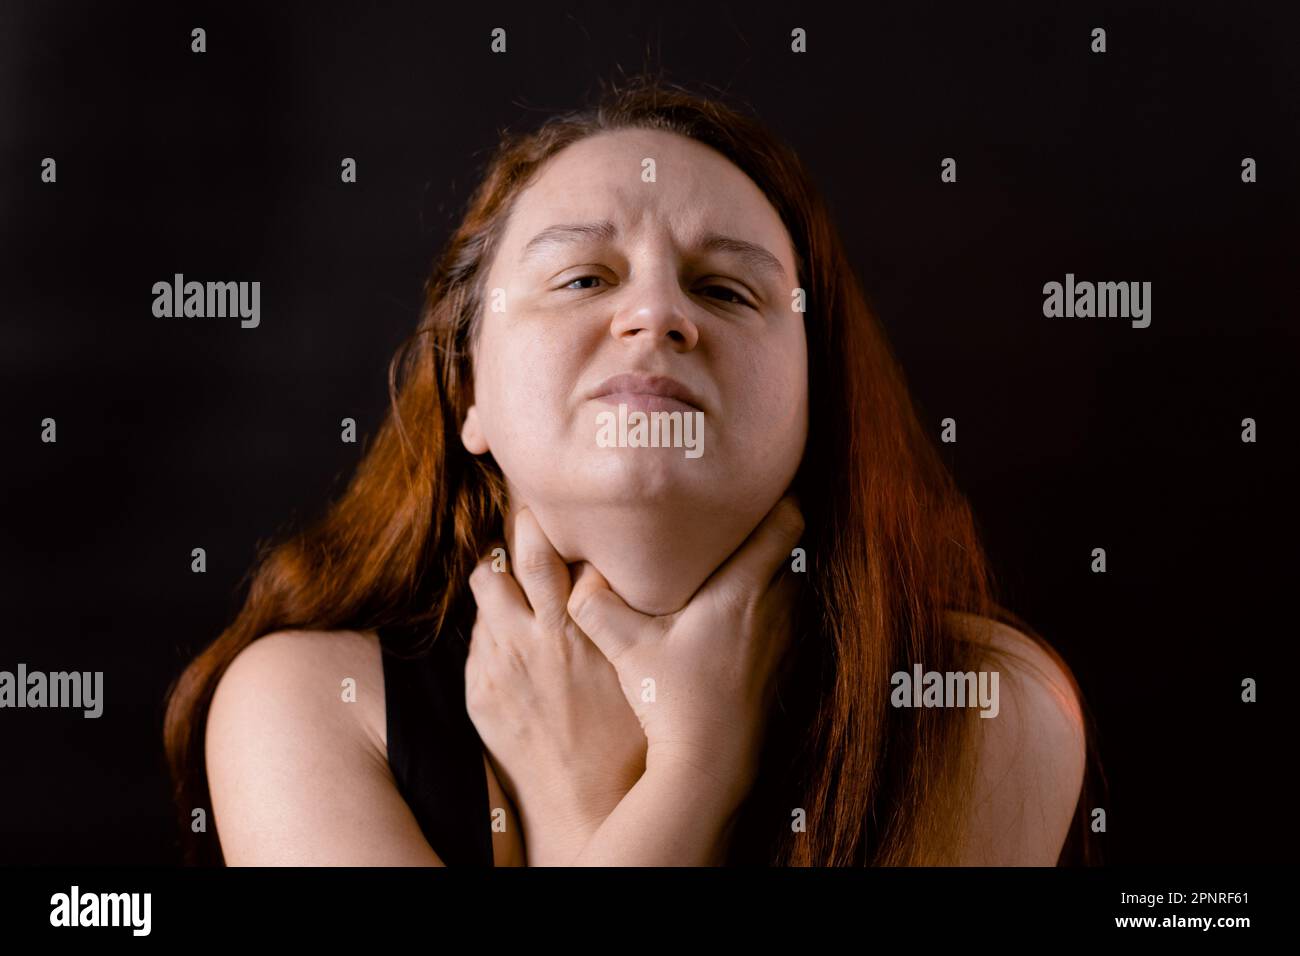 Painful choke hold stock photo. Image of anger, strangling - 17859270